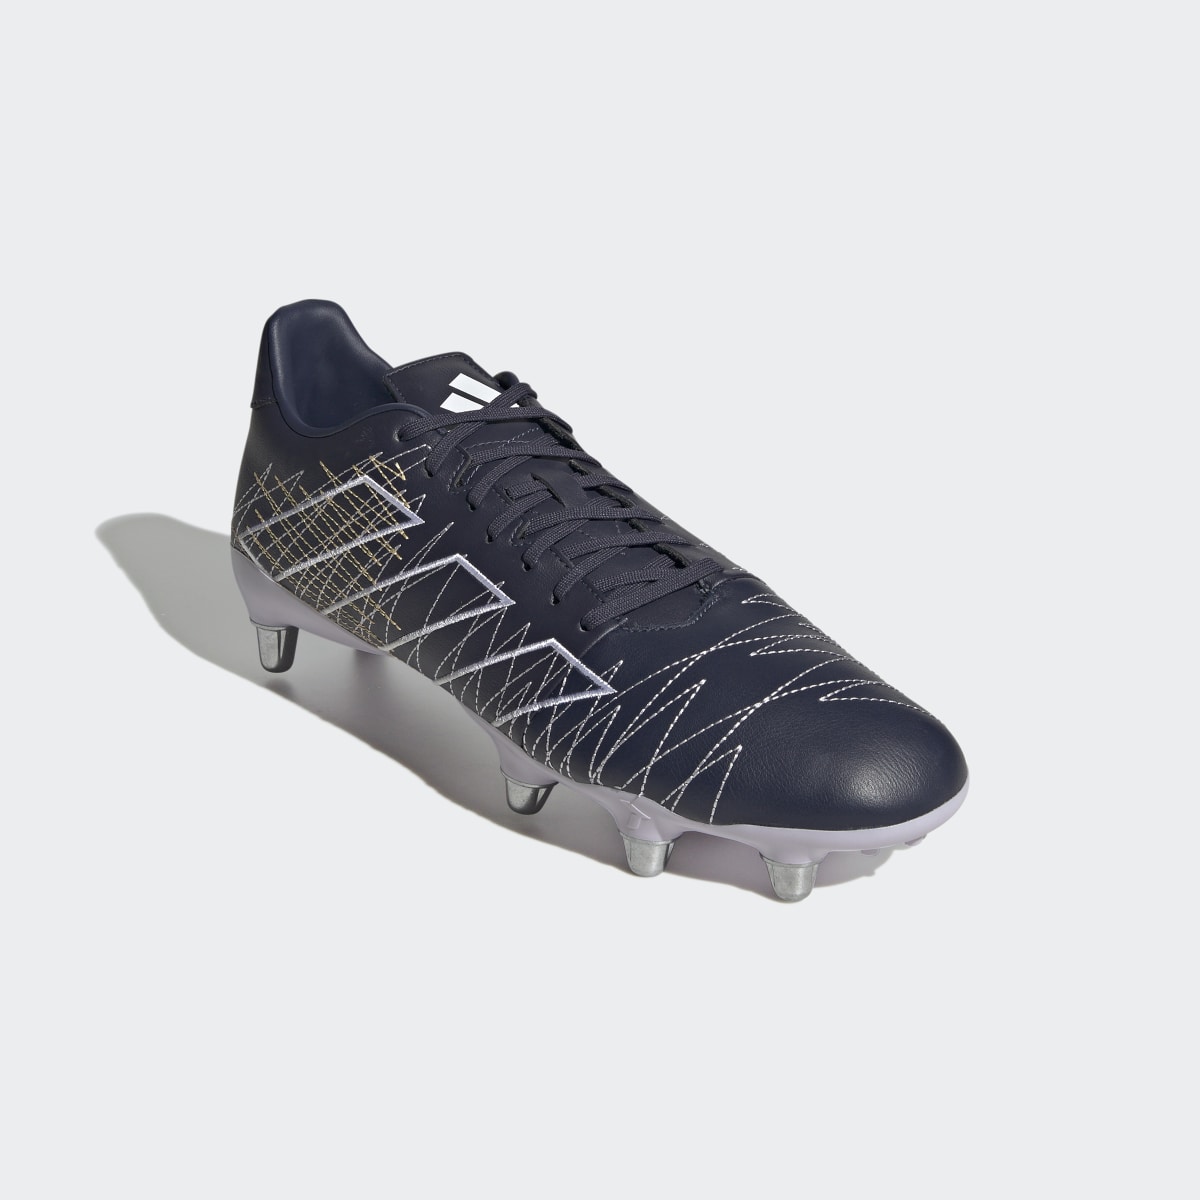 Adidas Kakari Elite SG Boots. 8